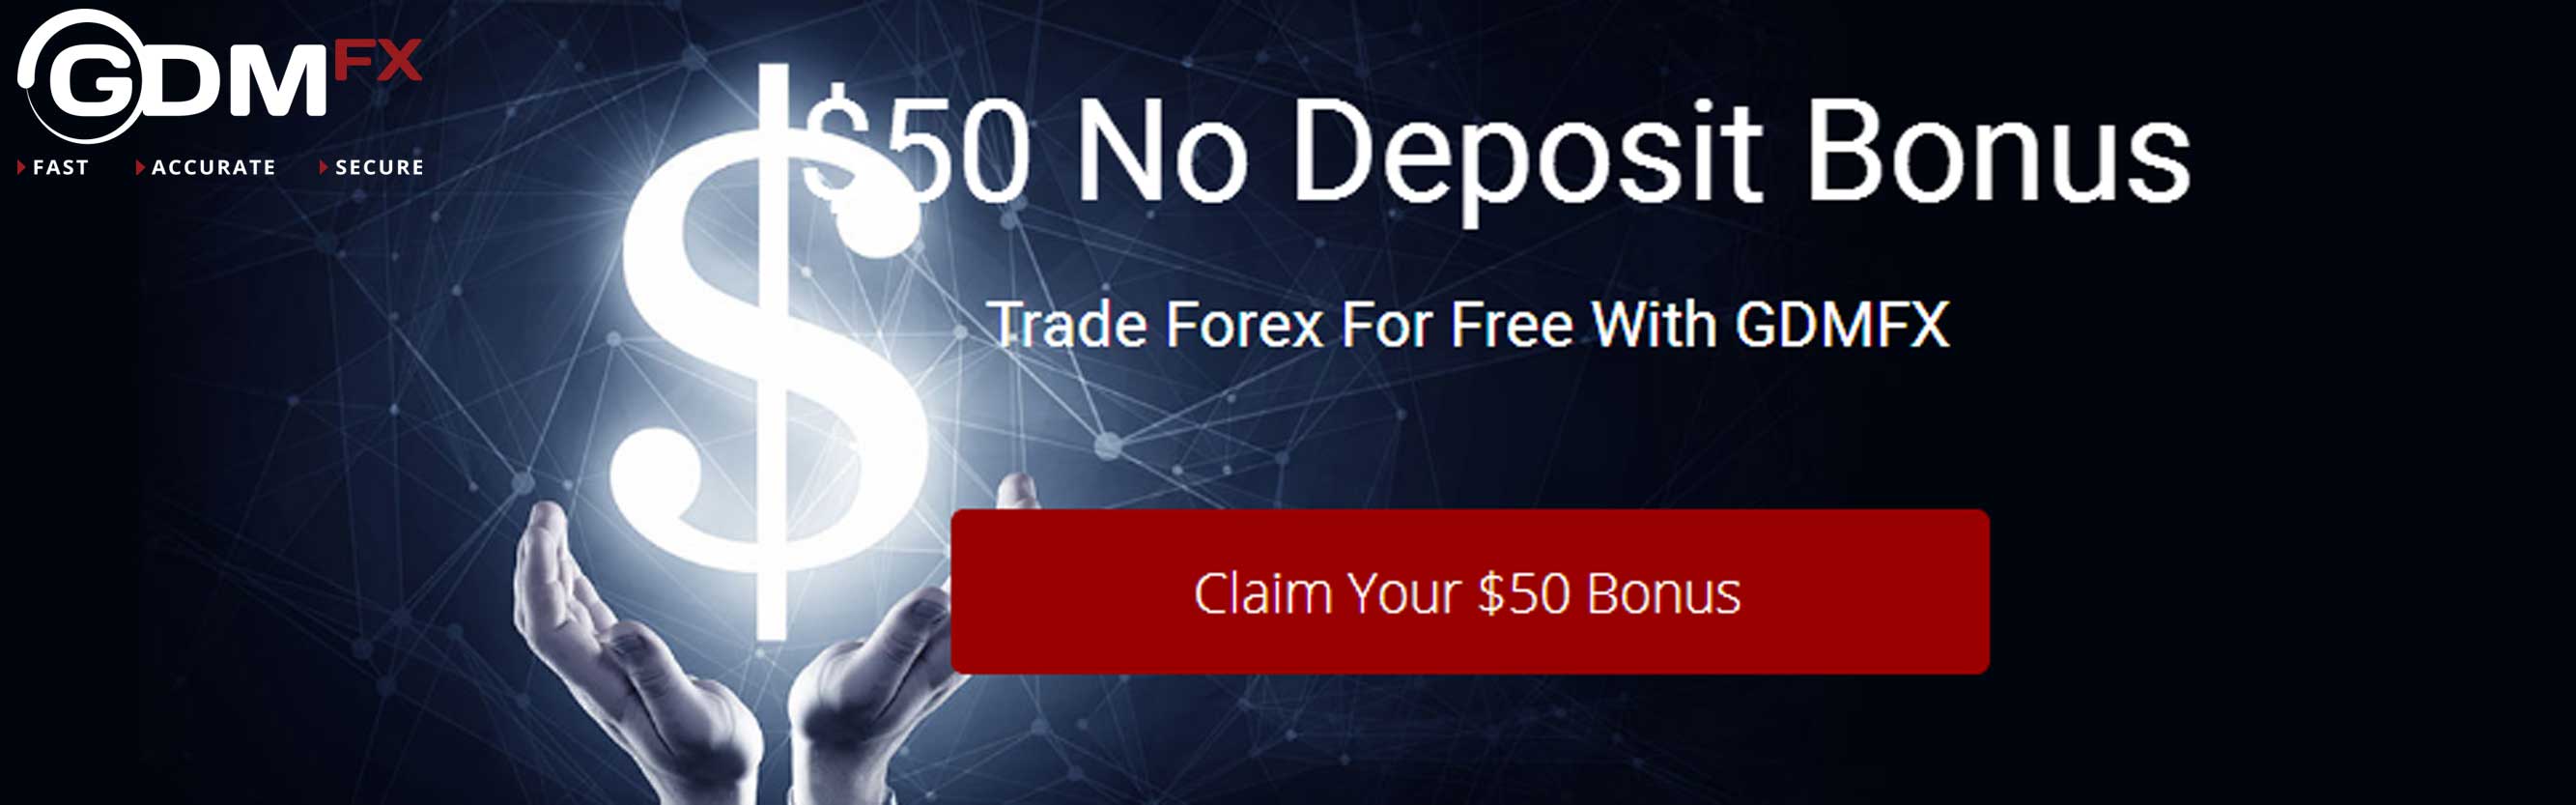 No deposit bonus - 70135